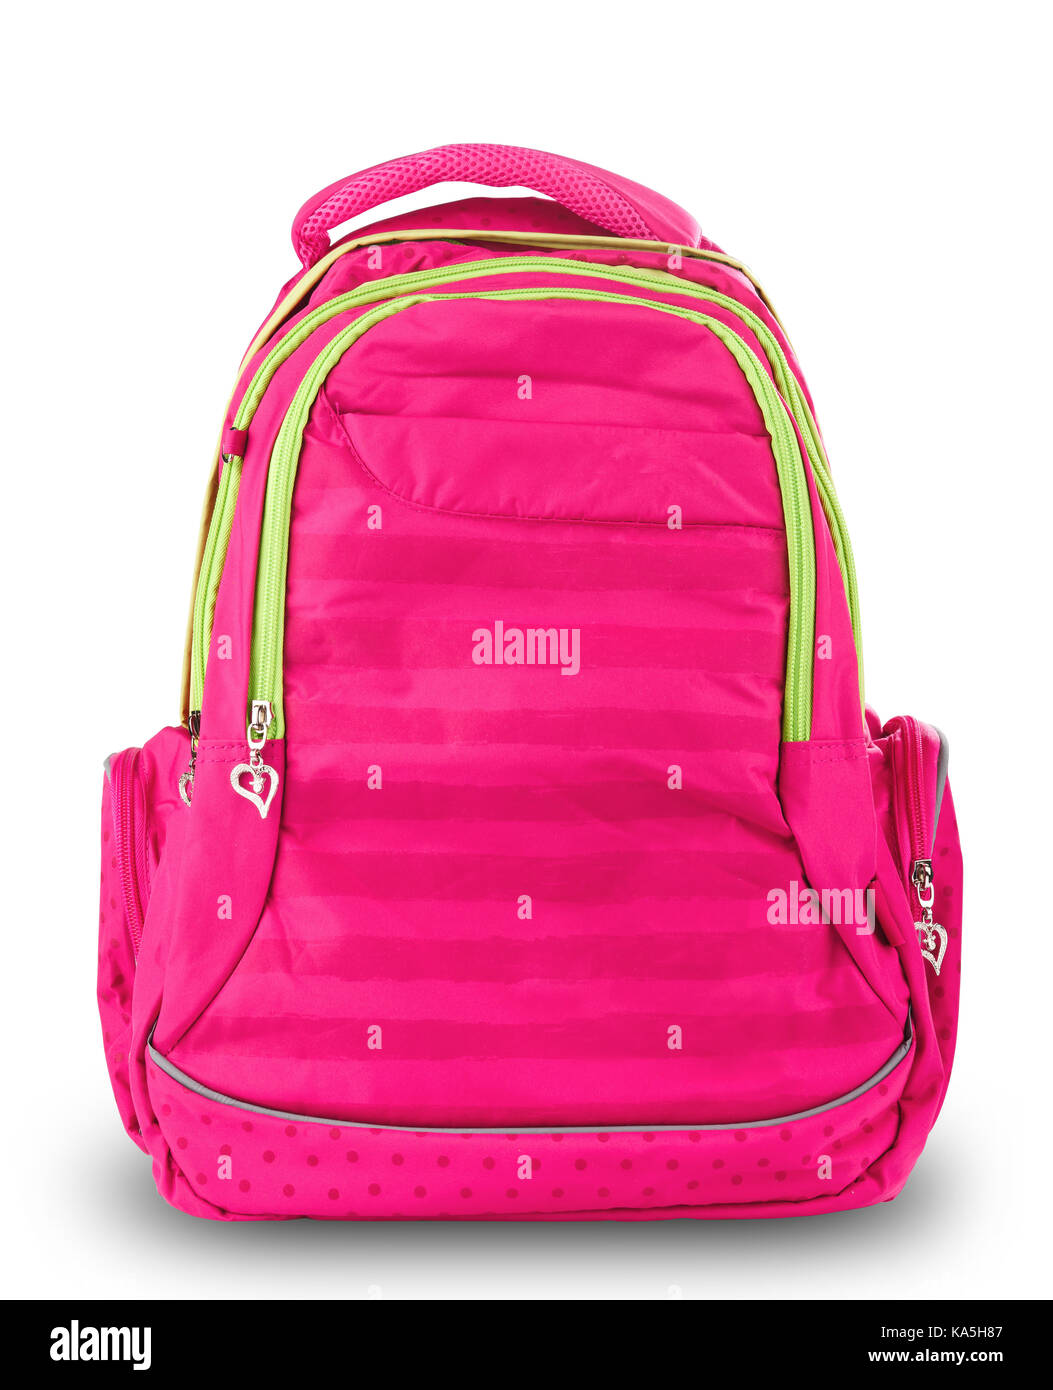 Rosa mochila escolar aislado Foto de stock